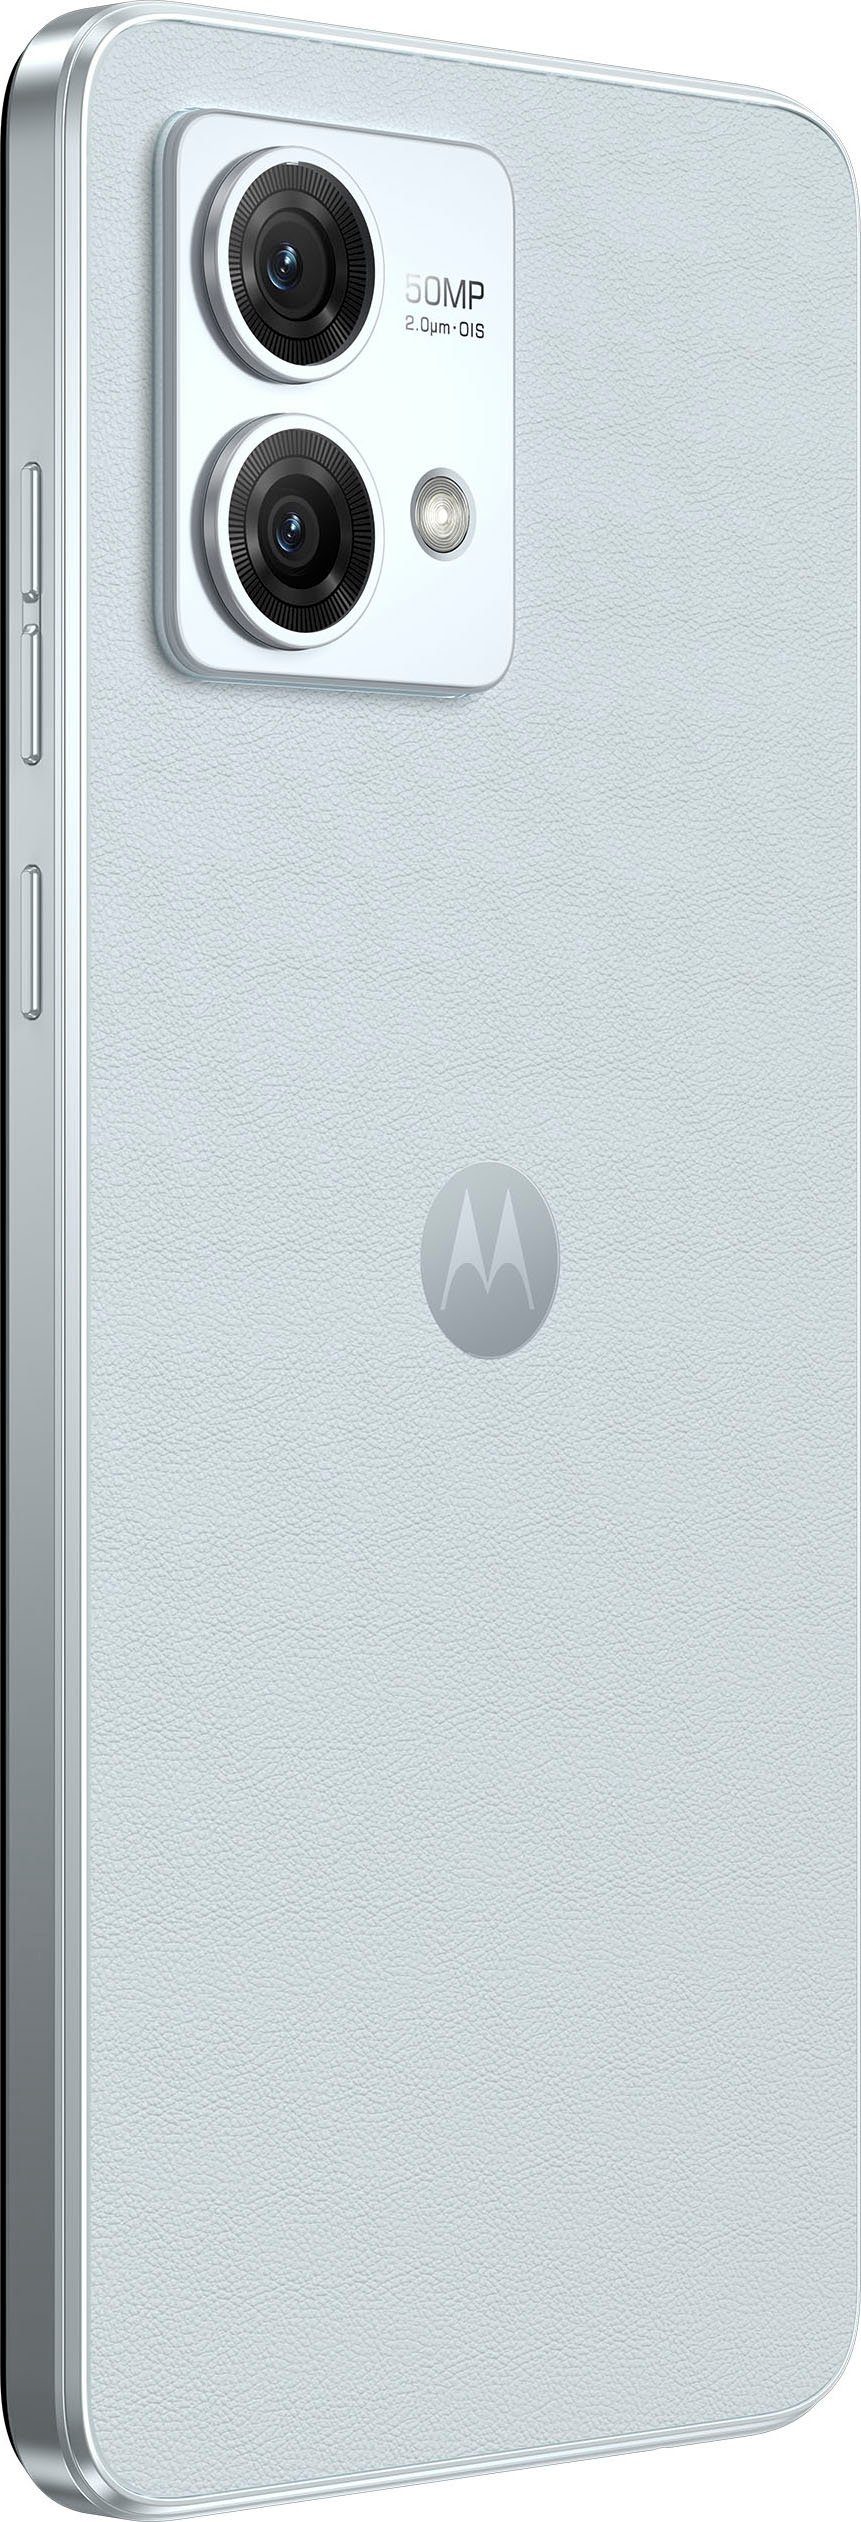 Motorola Kamera) MP cm/6,55 Zoll, 50 (16,64 Smartphone g84 Blau Glacier